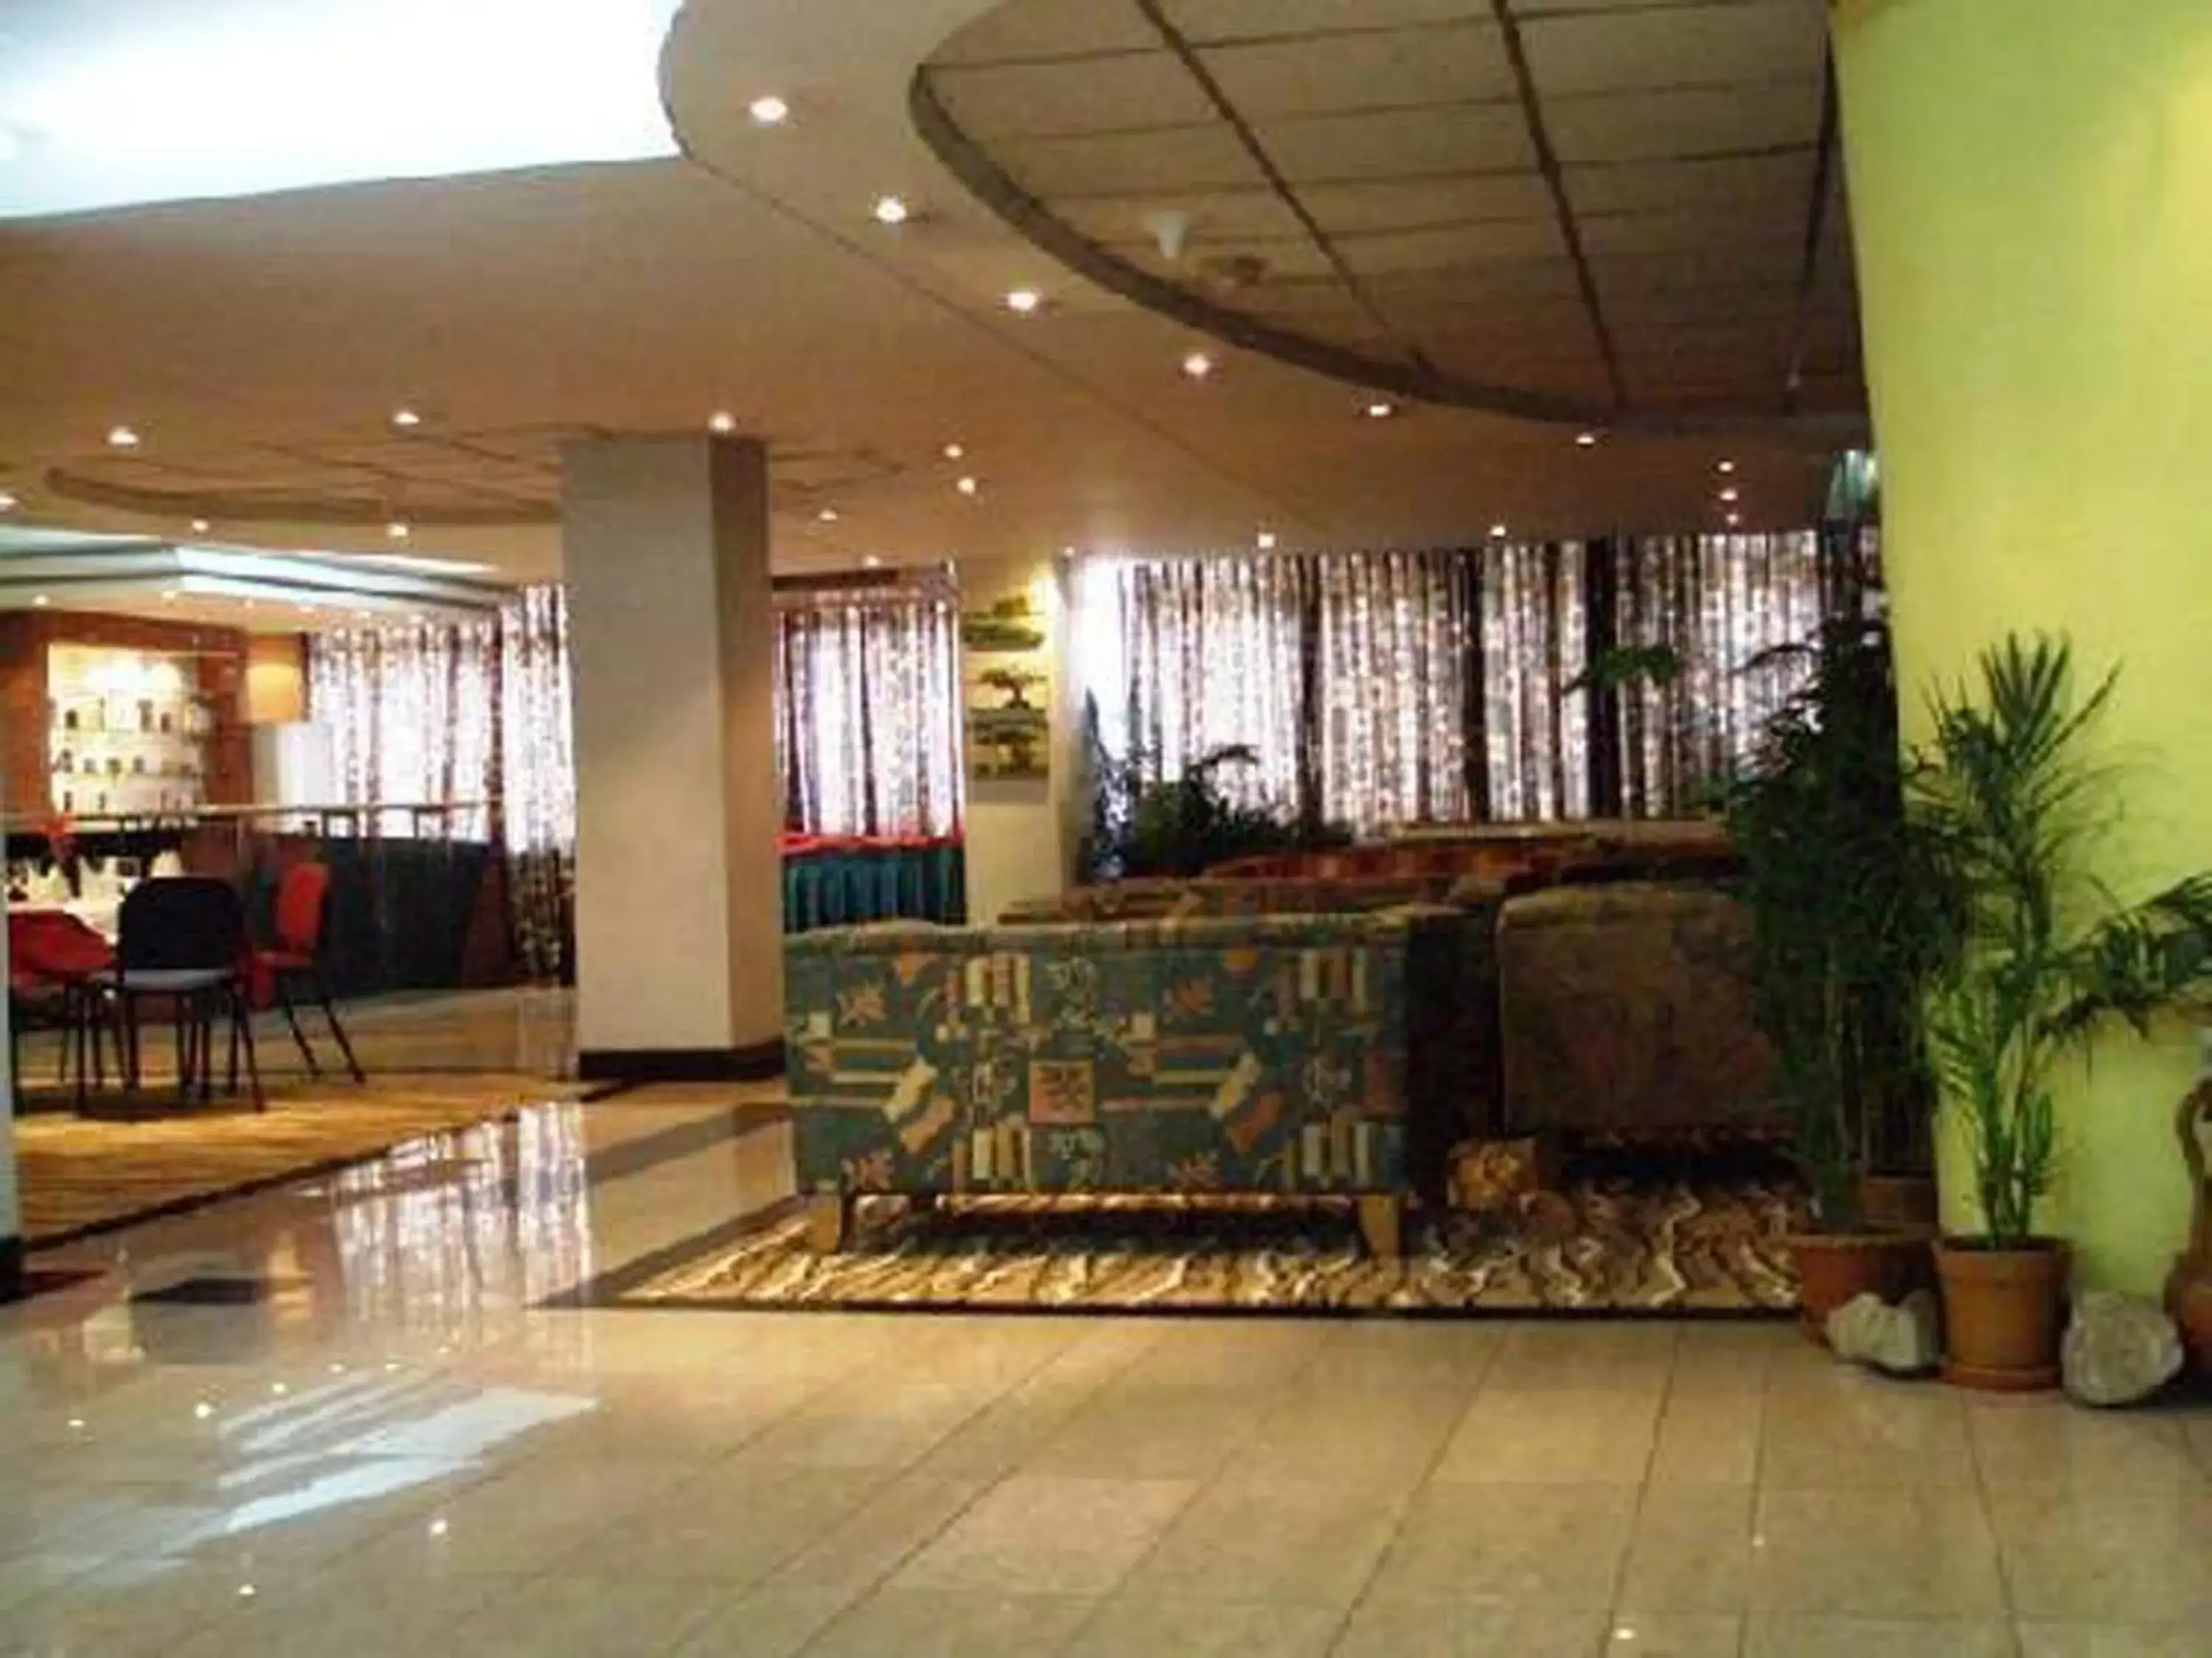 Lobby/Reception in La Vinci Hotel